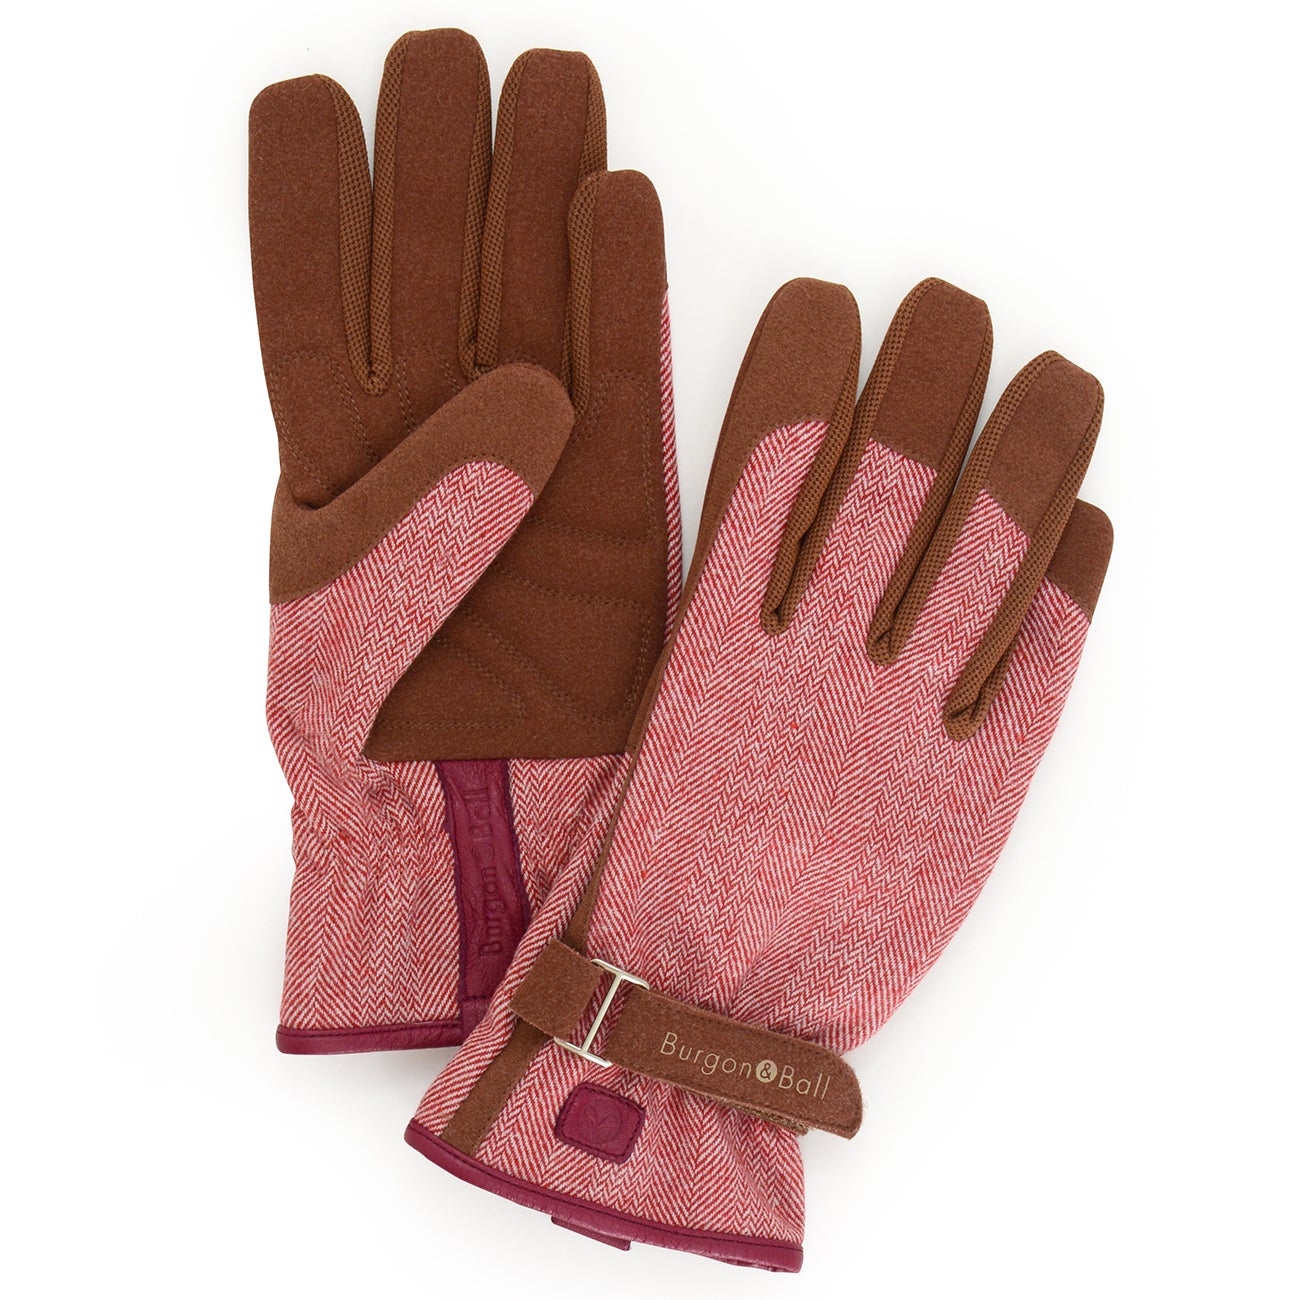 'Love the Glove' Women's Gloves, Red Tweed